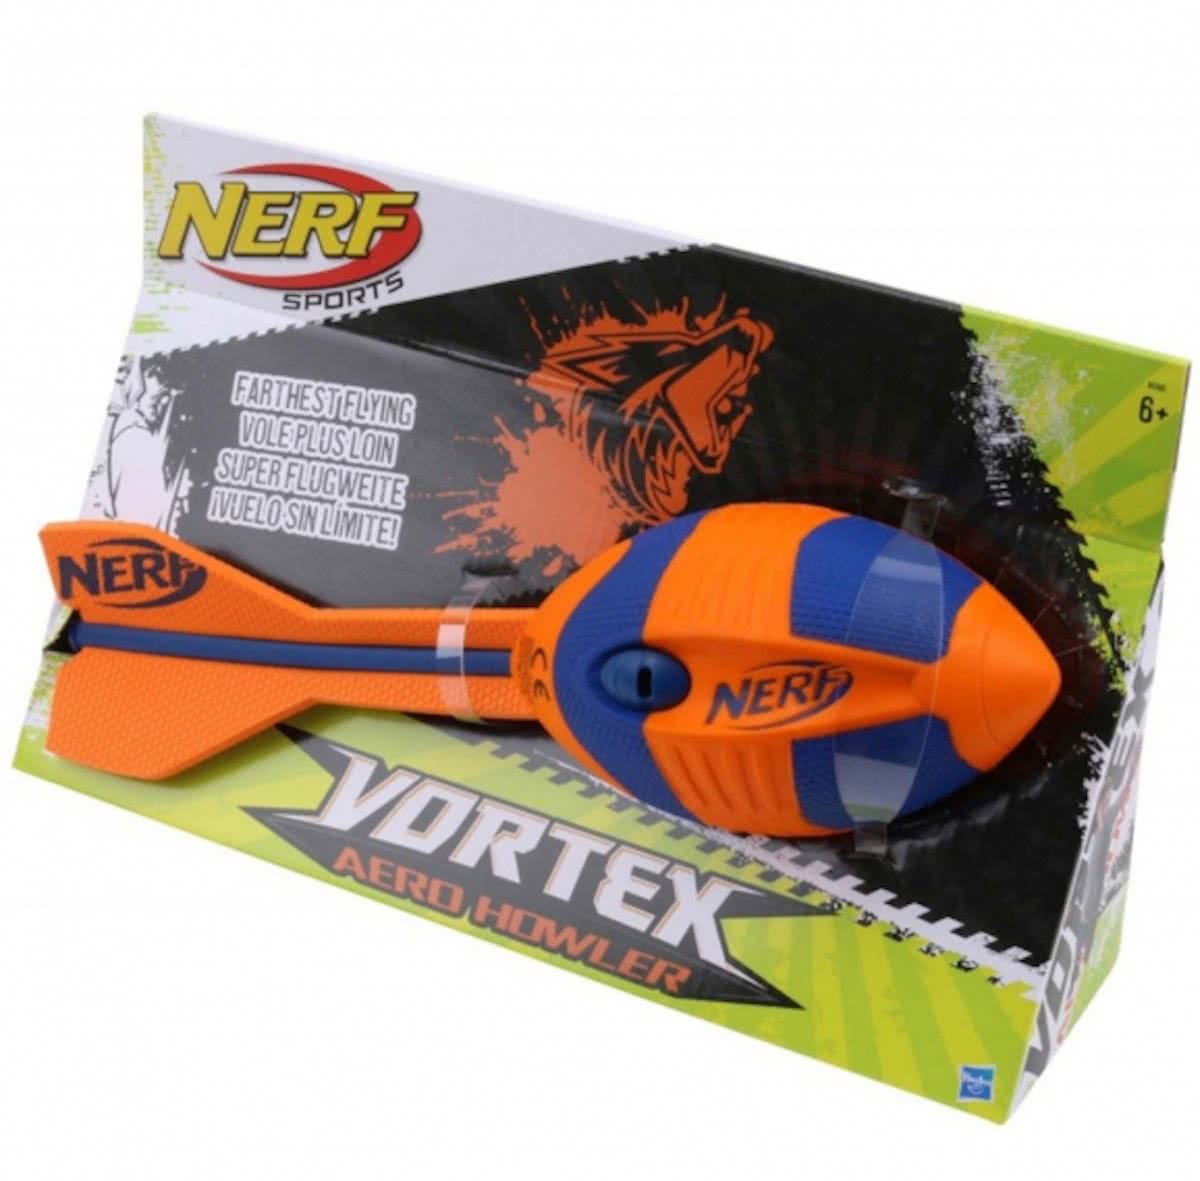 NERF Sports Vortex Aero Howler - Werpbal (Nerf), Hasbro